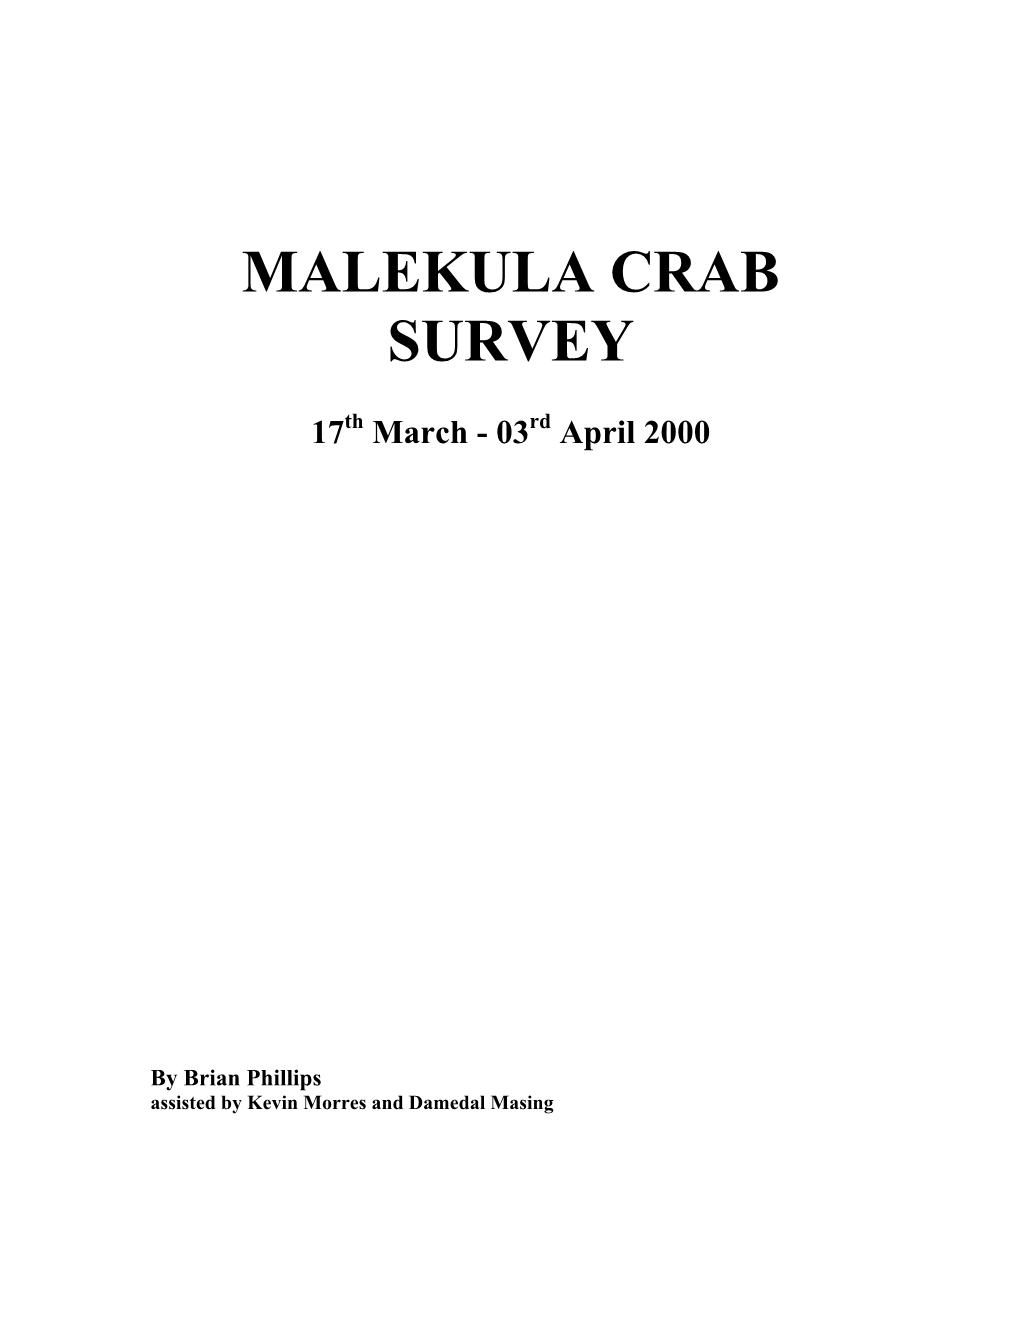 Malekula Crab Survey